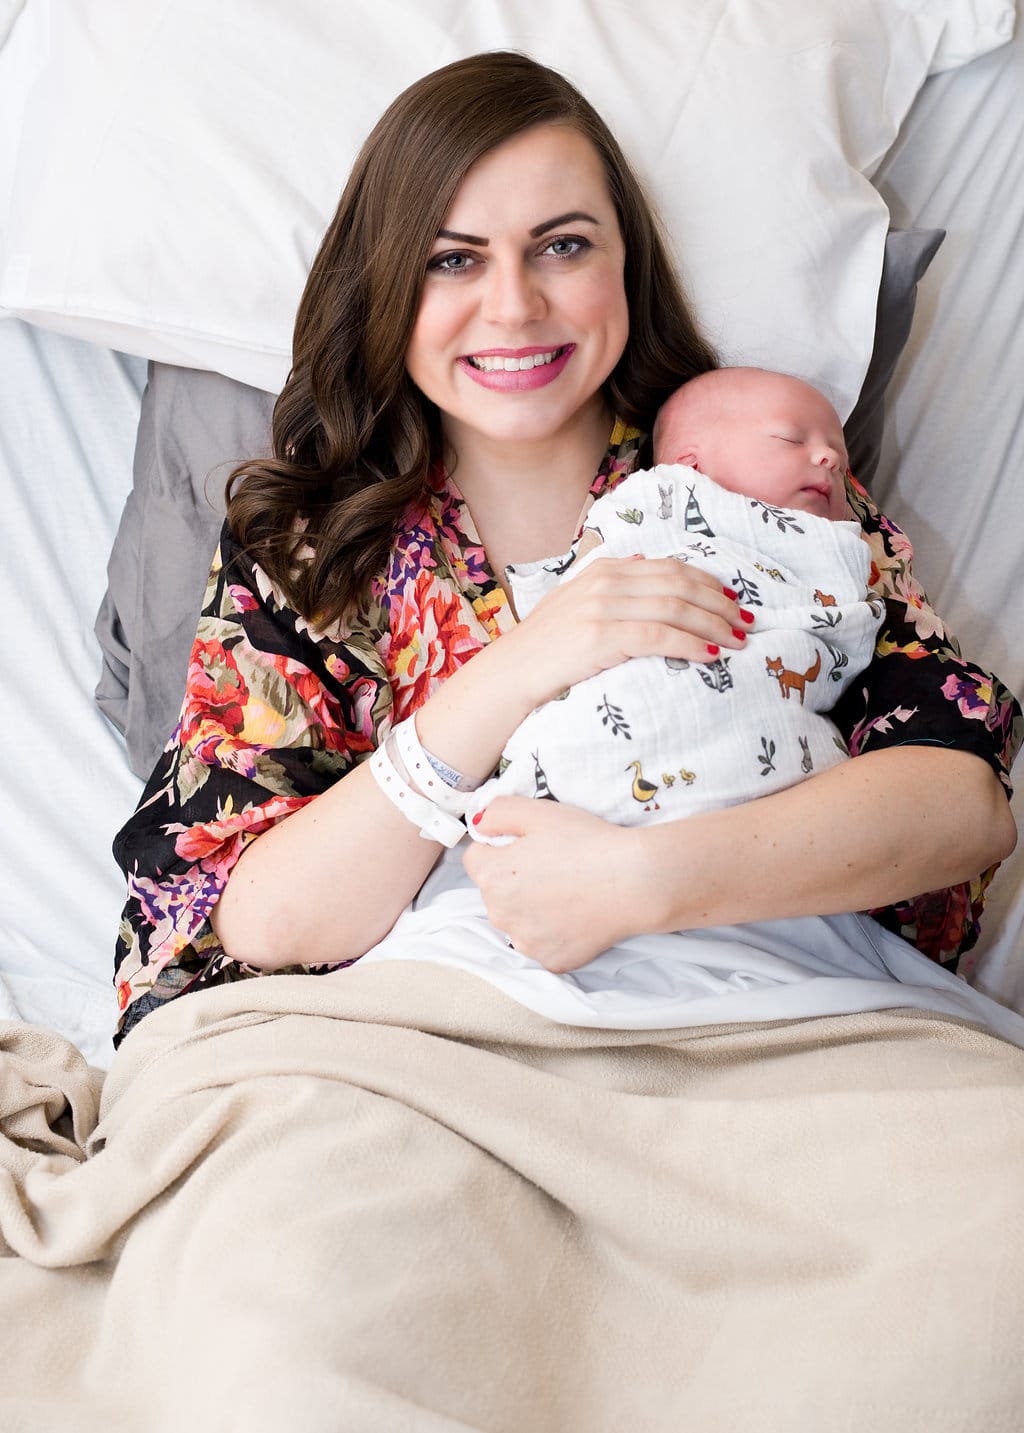 Newborn baby photo shoot in hospital: New mom in hospital bed snuggling swaddled newborn baby. 